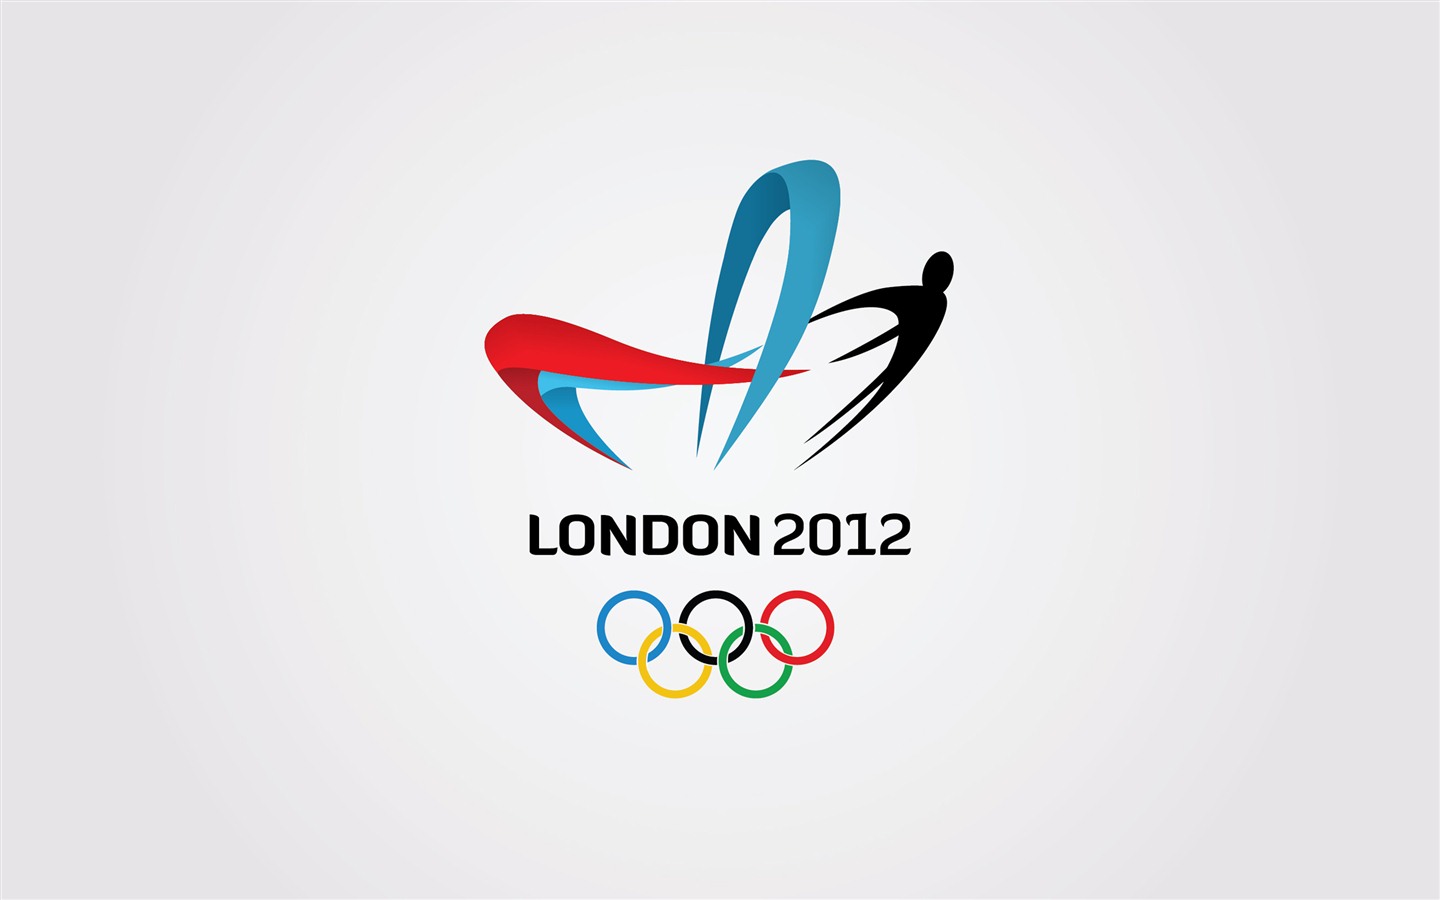 London 2012 Olympics theme wallpapers (2) #25 - 1440x900